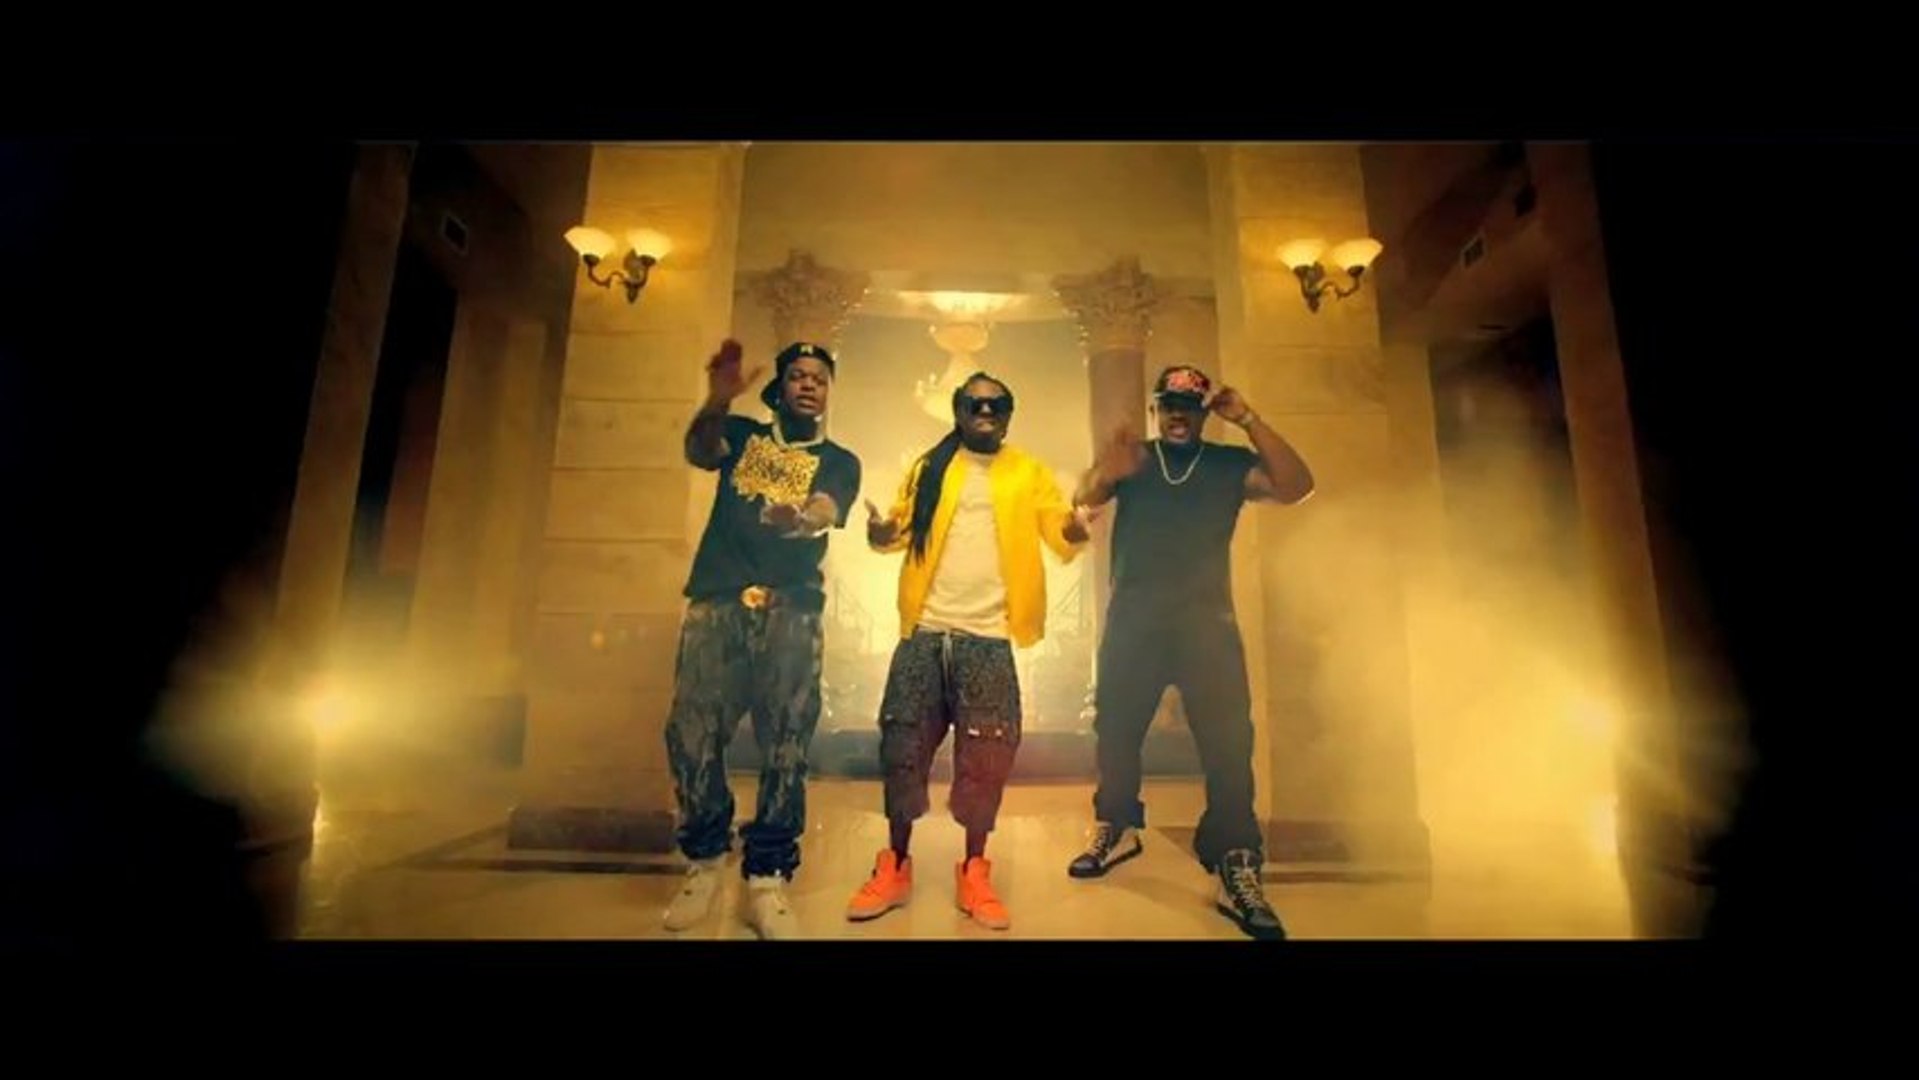 Birdman - Tapout ft. Lil Wayne, Future, Nicki Minaj and Mack Maine  [Official Music Video] (HD) - Video Dailymotion